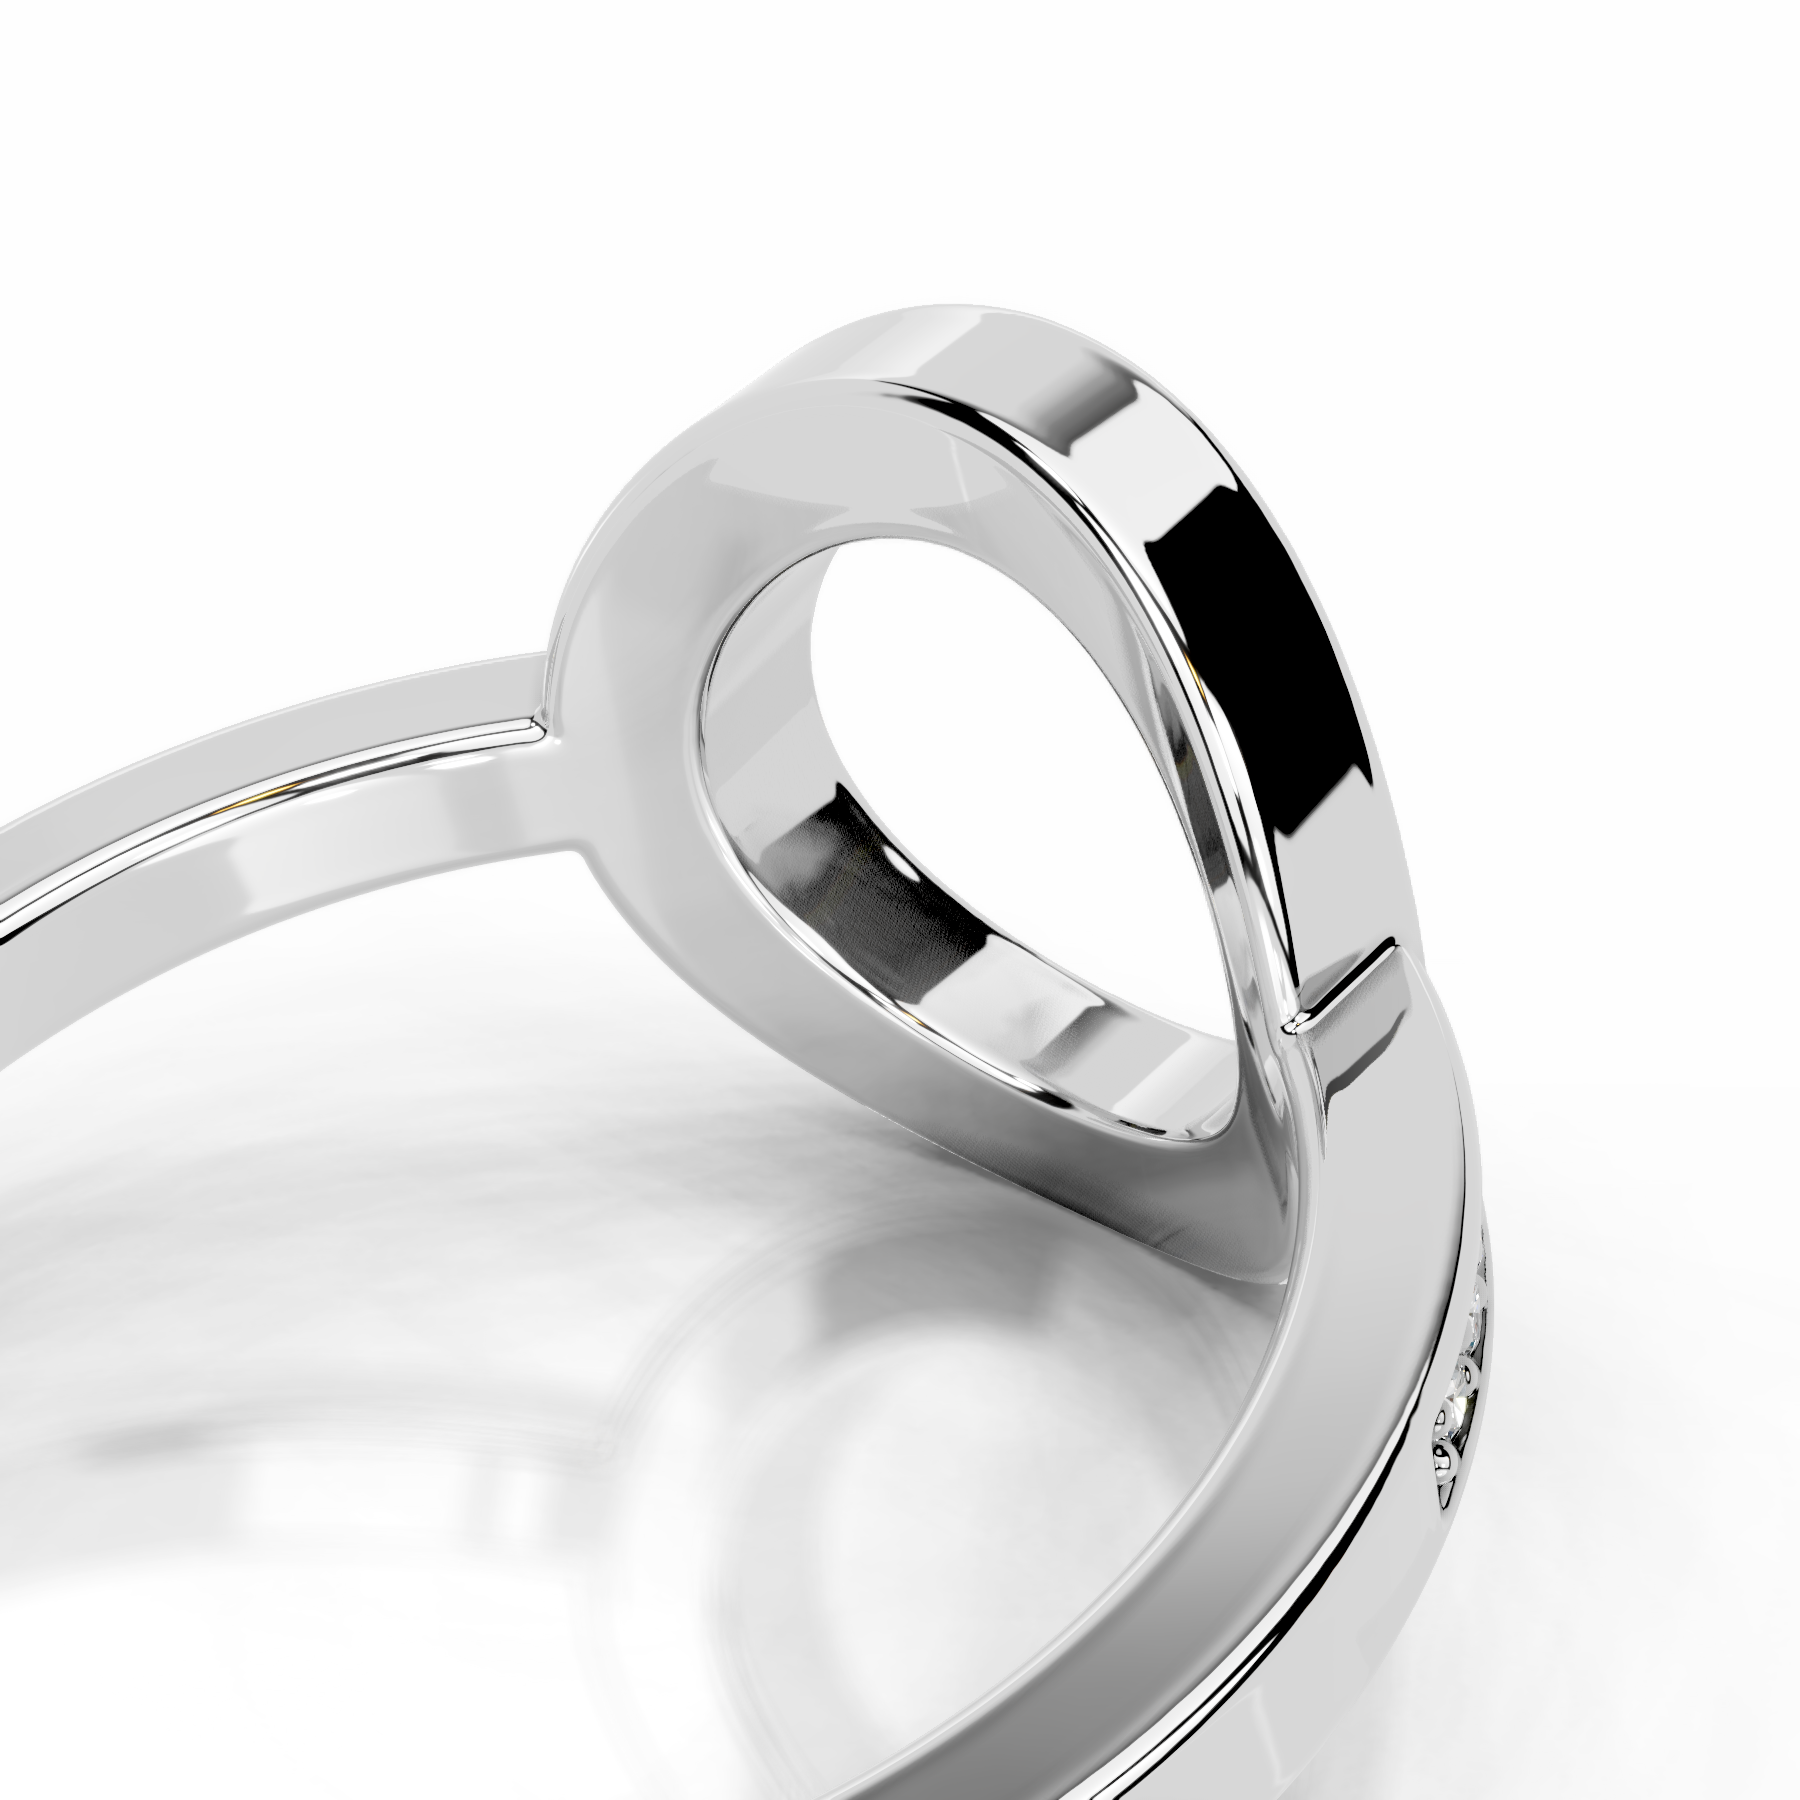 Inessa Diamond Wedding Ring   (0.15 Carat) -18K White Gold